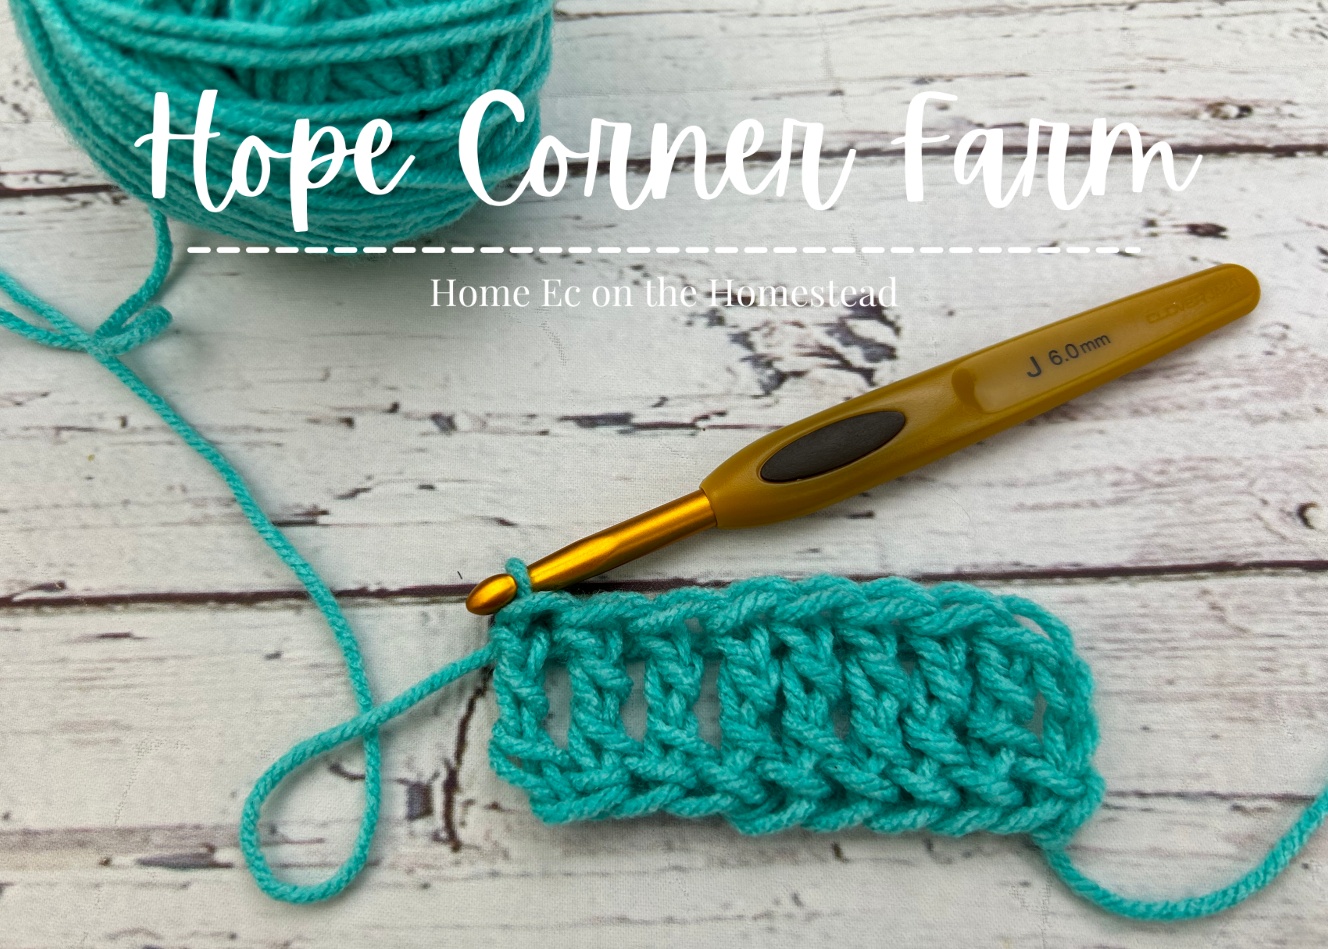 How to Foundation Treble Crochet